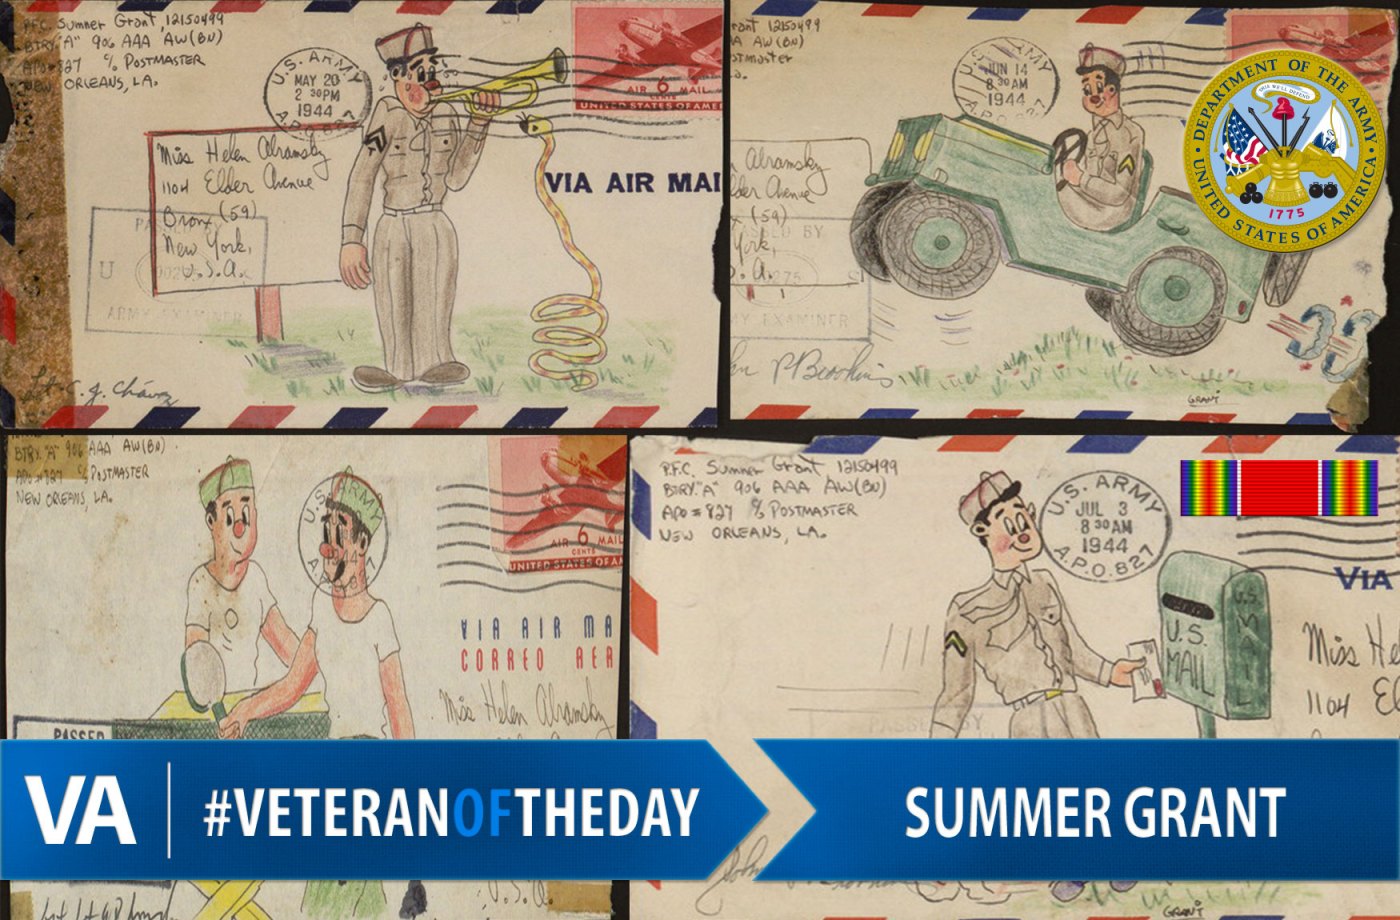 Summer Grant - Veteran of the Day